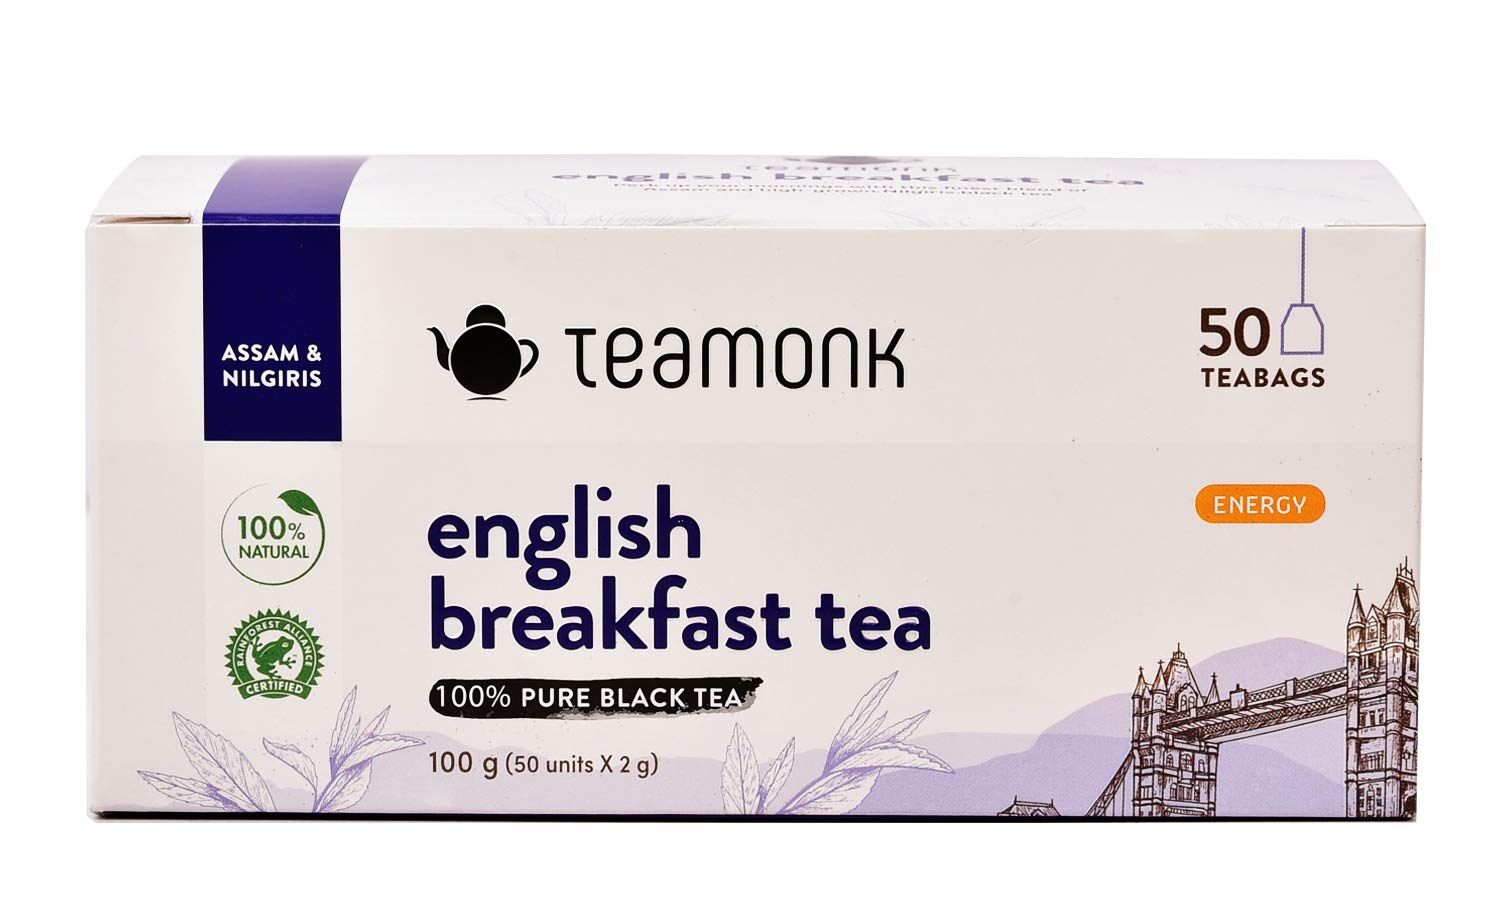 Teamonk English Breakfast Tea Image